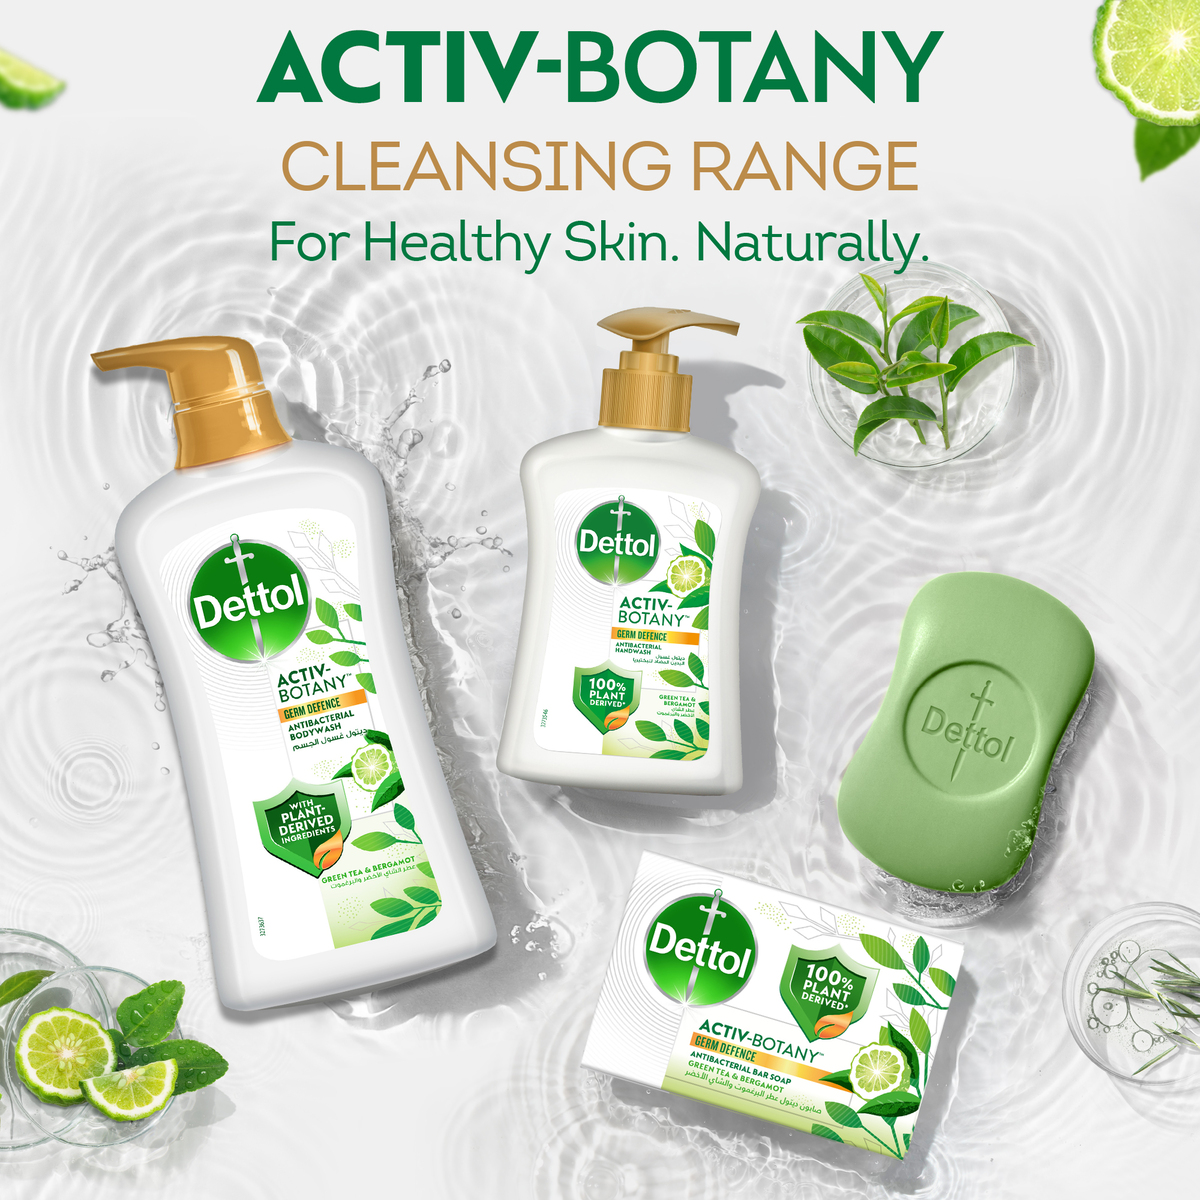 Dettol Activ-Botany Antibacterial Liquid Handwash, Green Tea & Bergamot Fragrance, 100% Plant-Derived Ingredients 2 x 200 ml